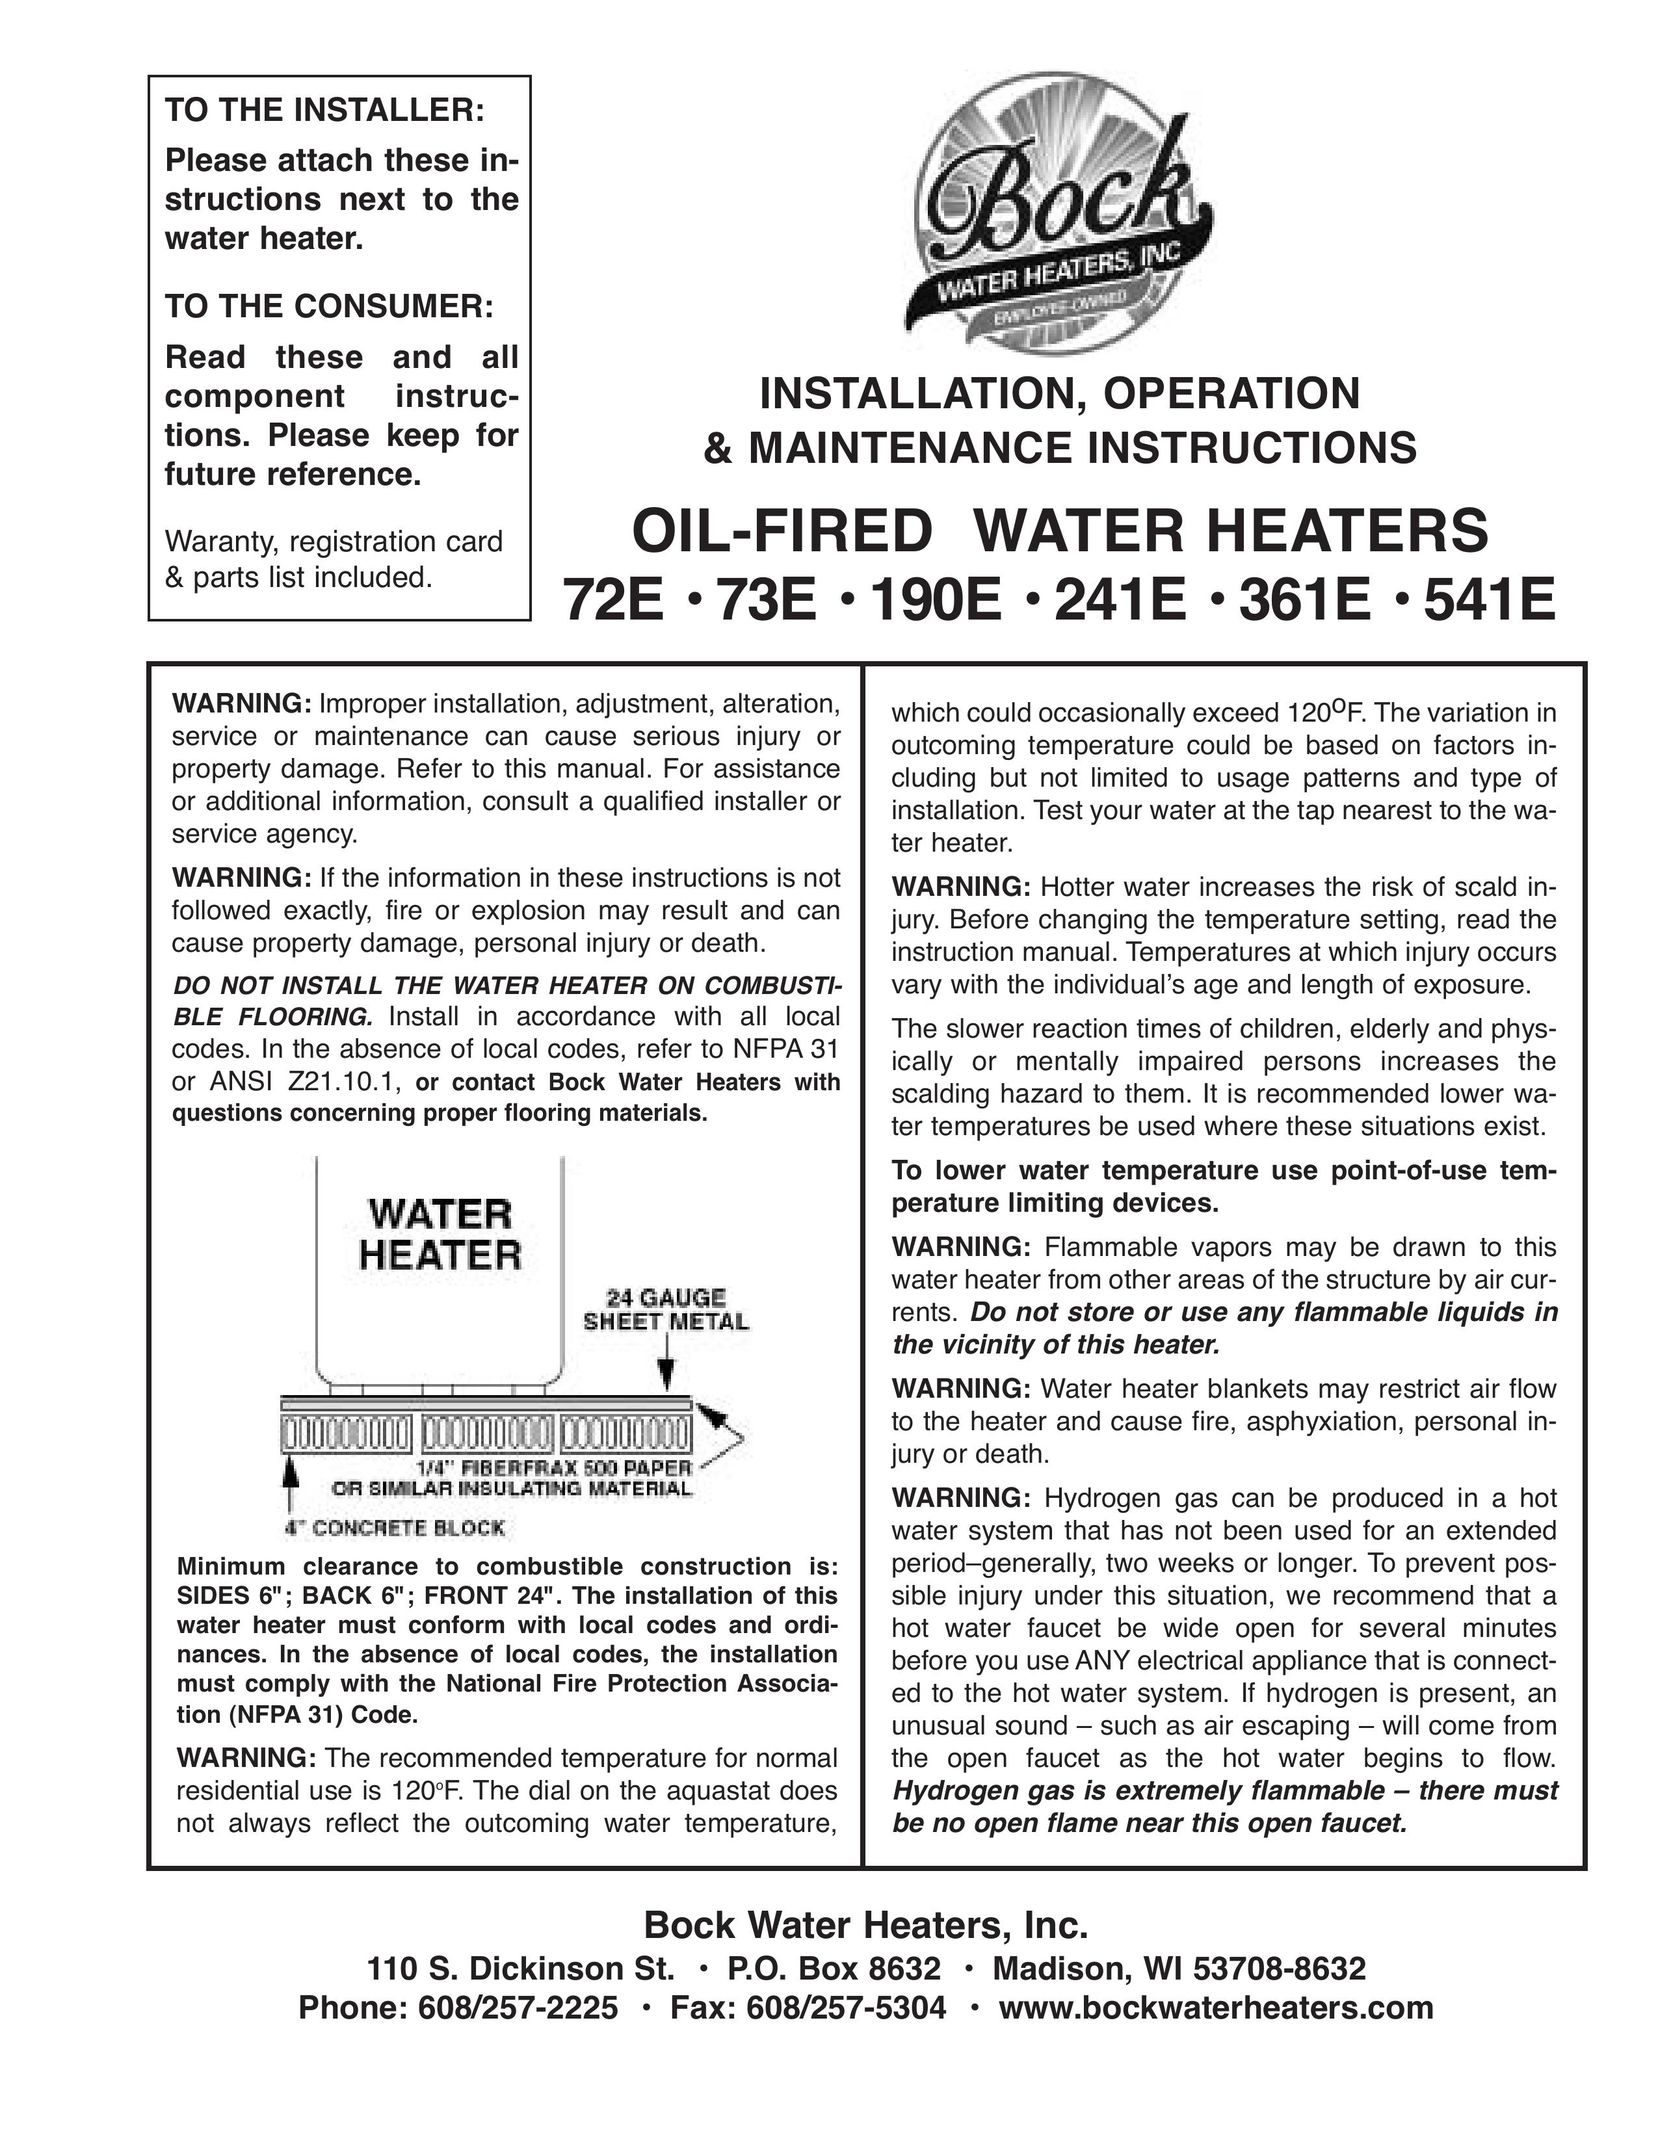 Bock Water heaters 541E Water Heater User Manual